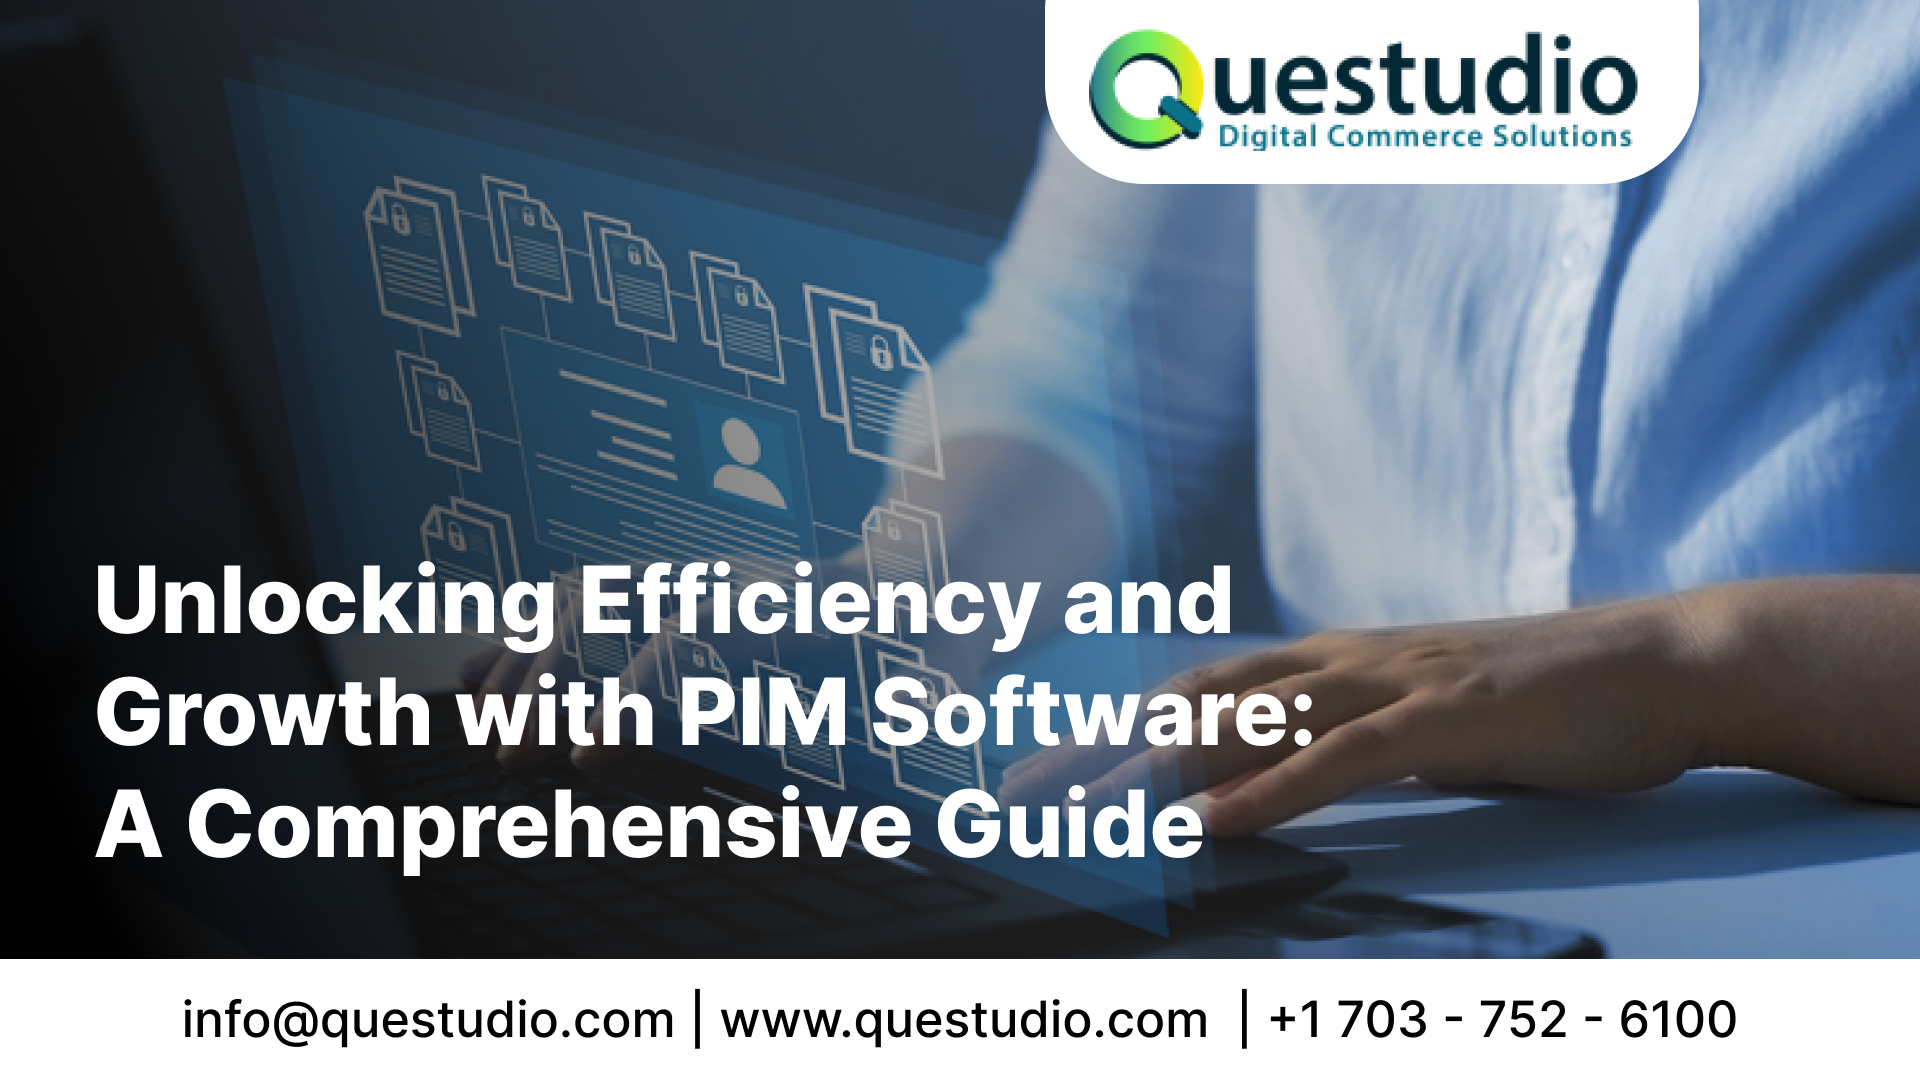 Pim Software in India